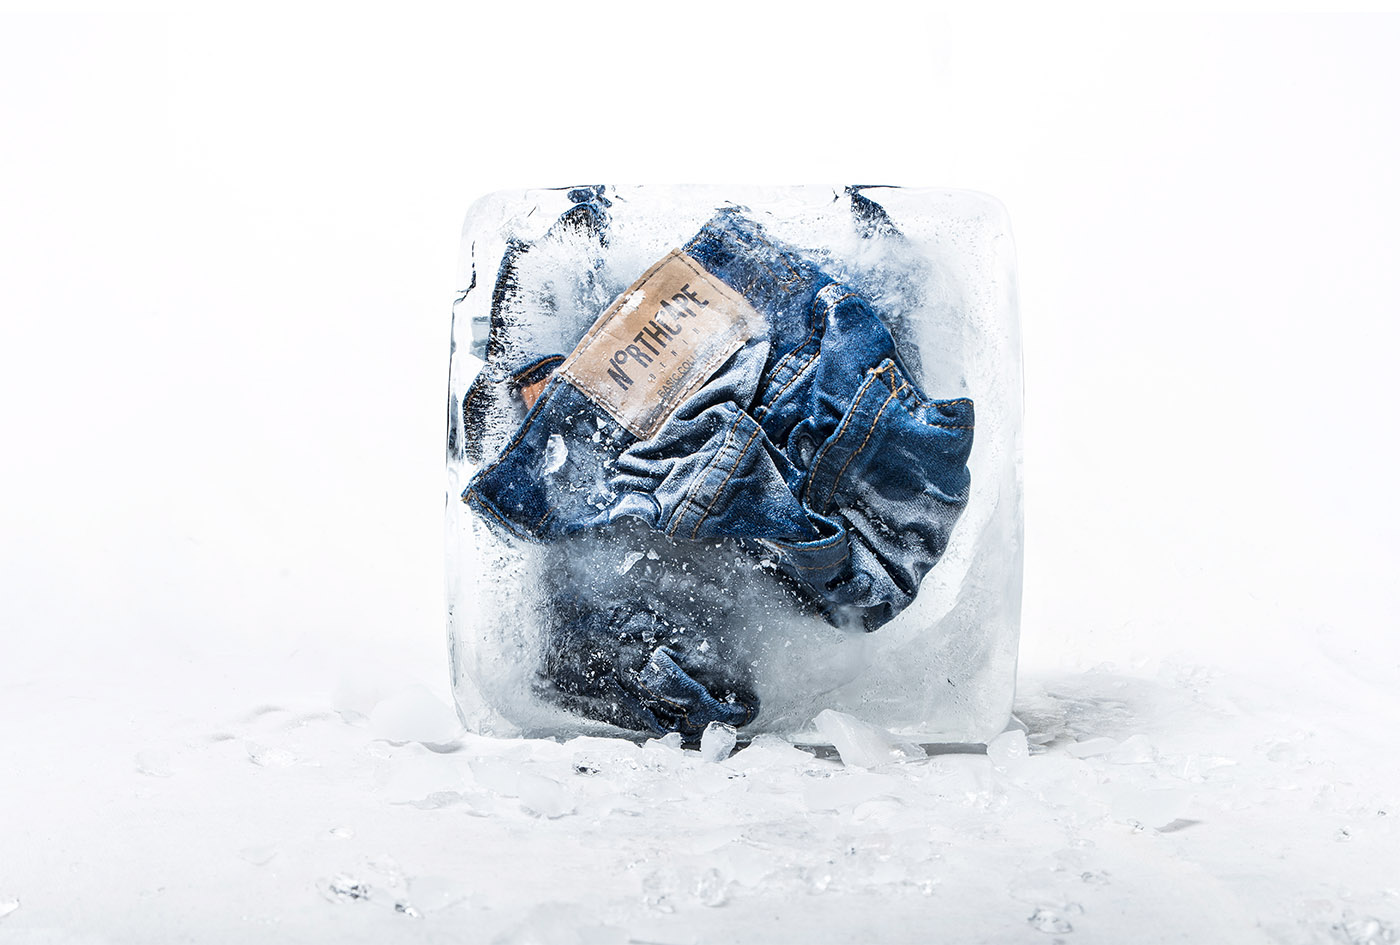 ice Alaska jeans brand snow north Scandinavian norway cold eis eisblock eiswürfel u5 akademie